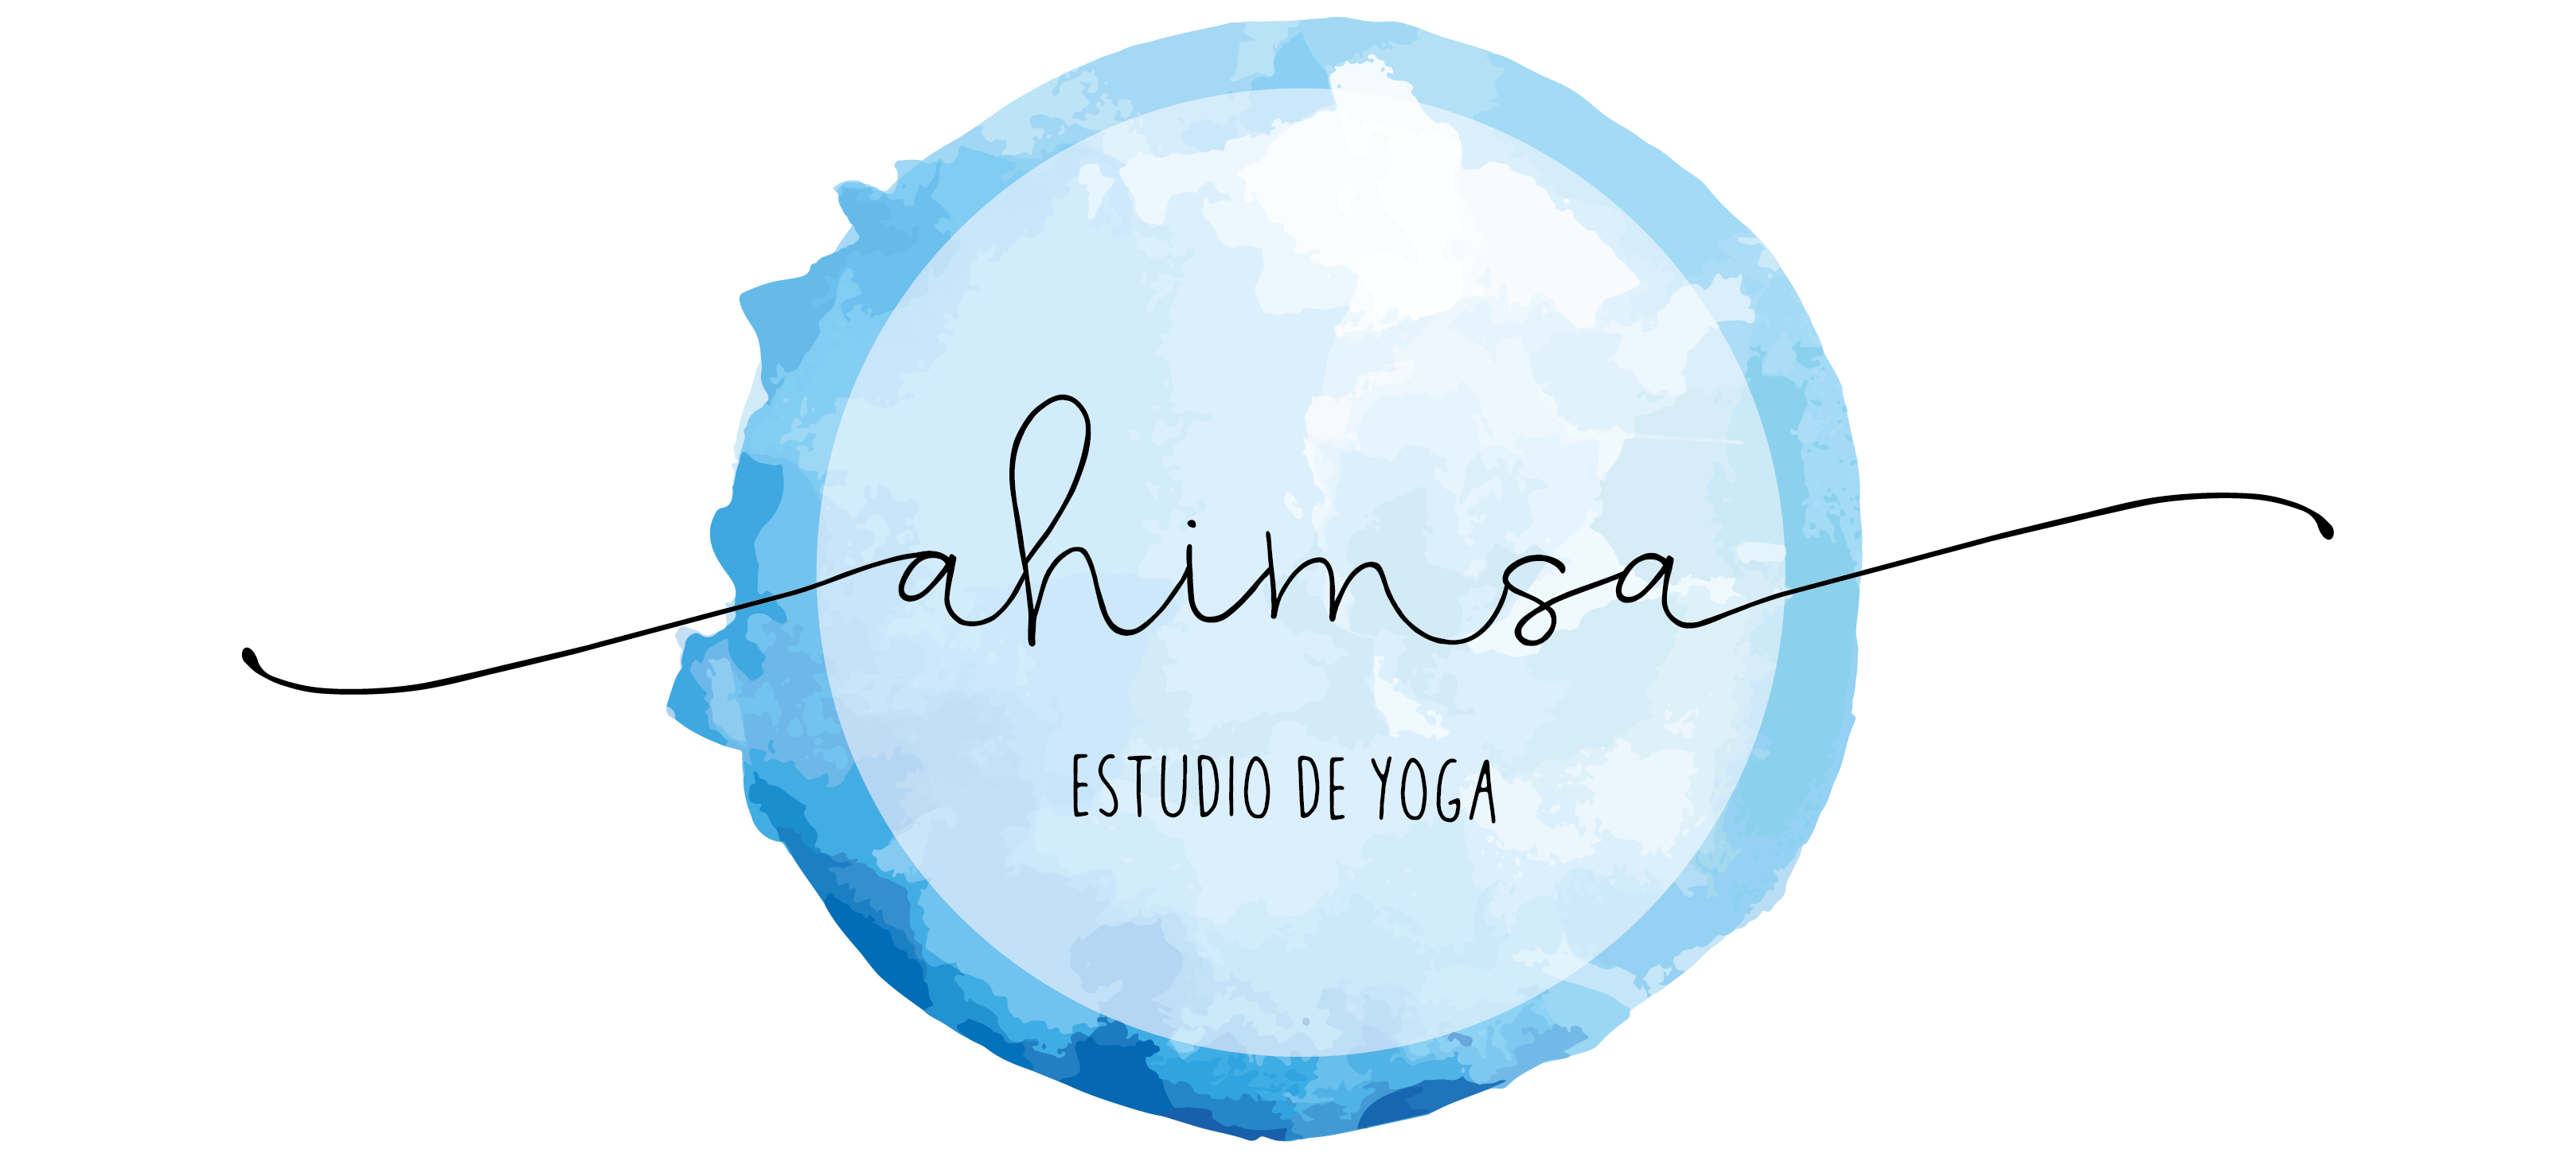 Ahimsa Estudio de Yoga